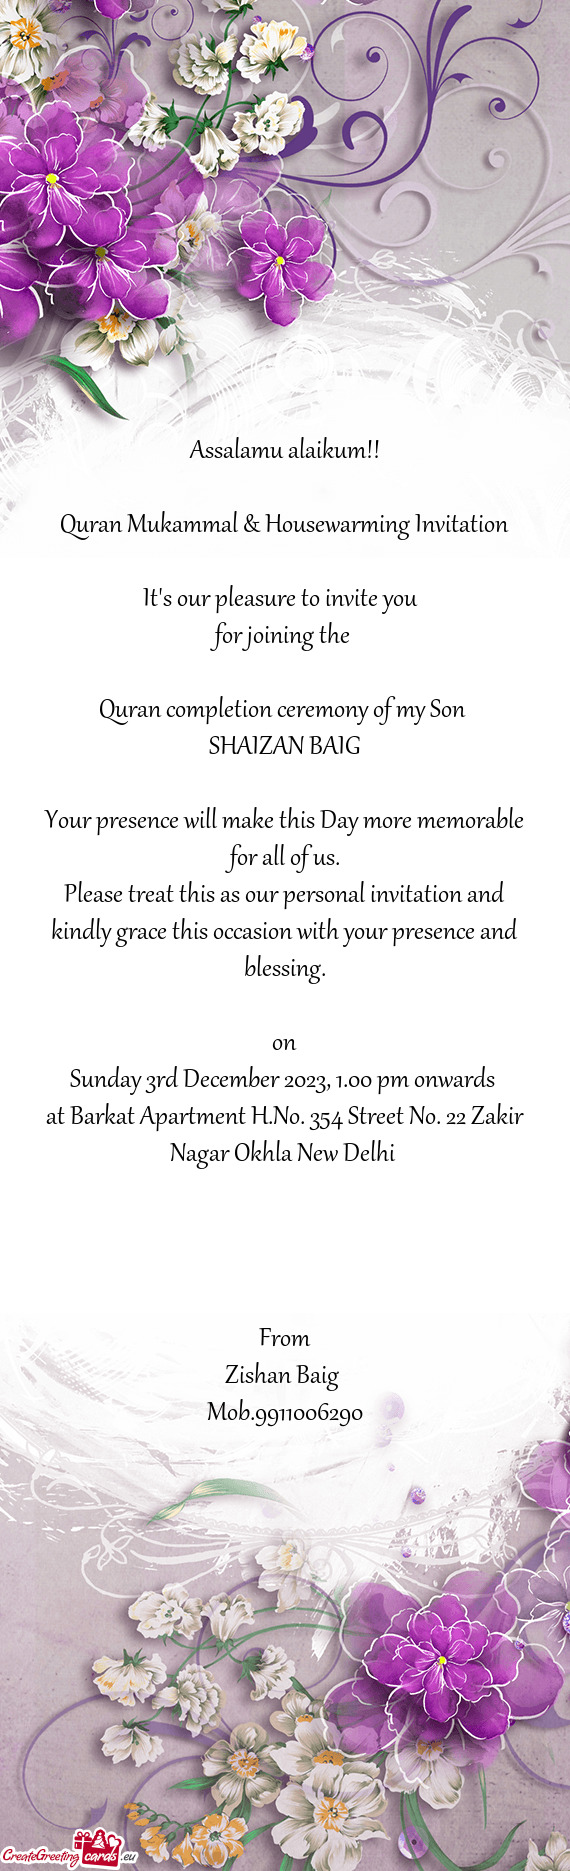 Quran Mukammal & Housewarming Invitation